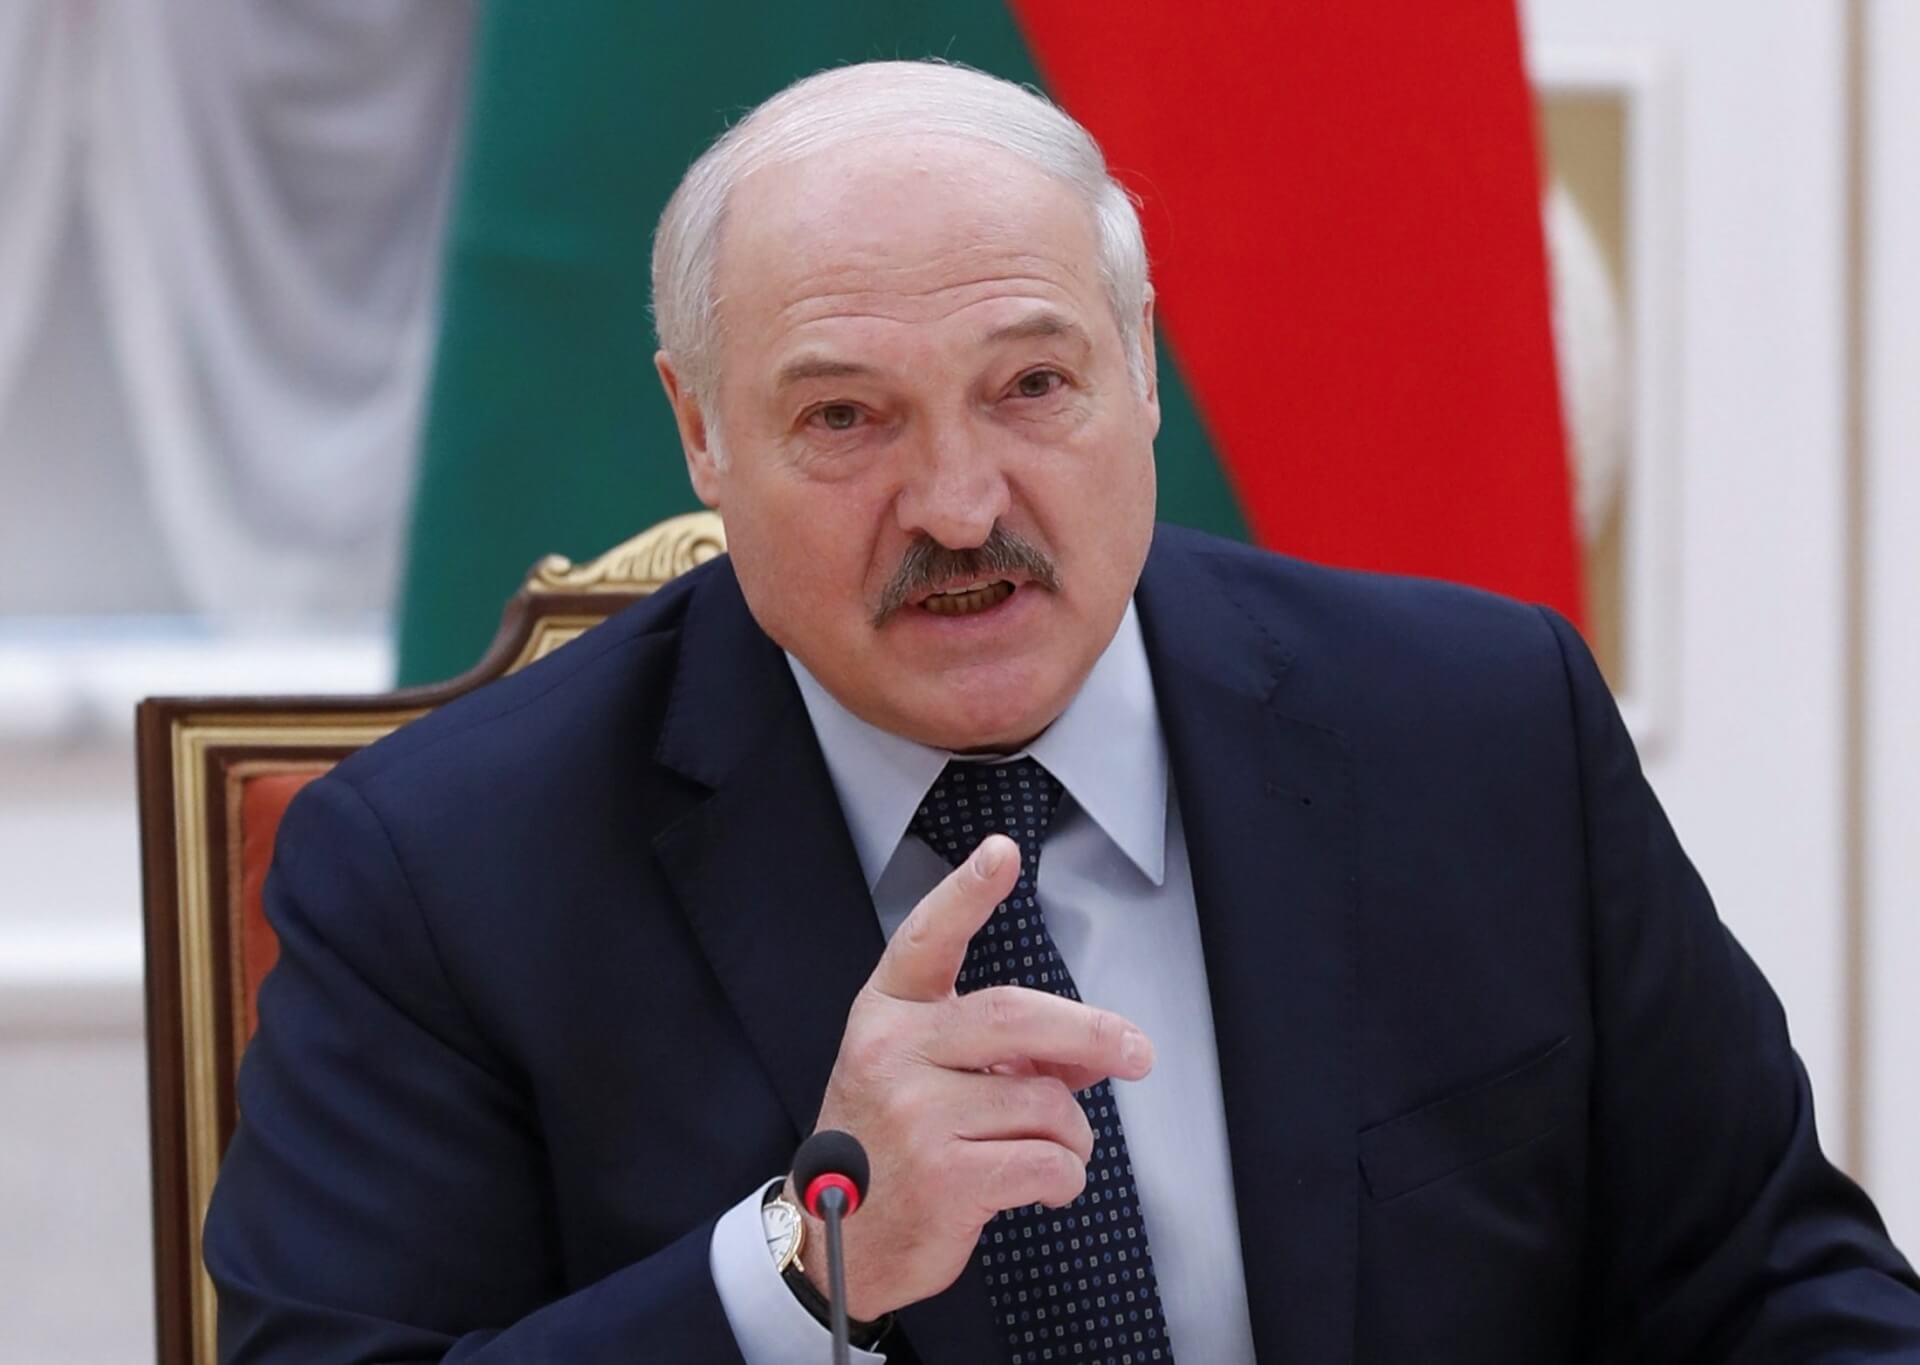 European Parliament Adopts Resolution Accusing Belarus Pres. Lukashenko of Complicity in Putin’s Crimes